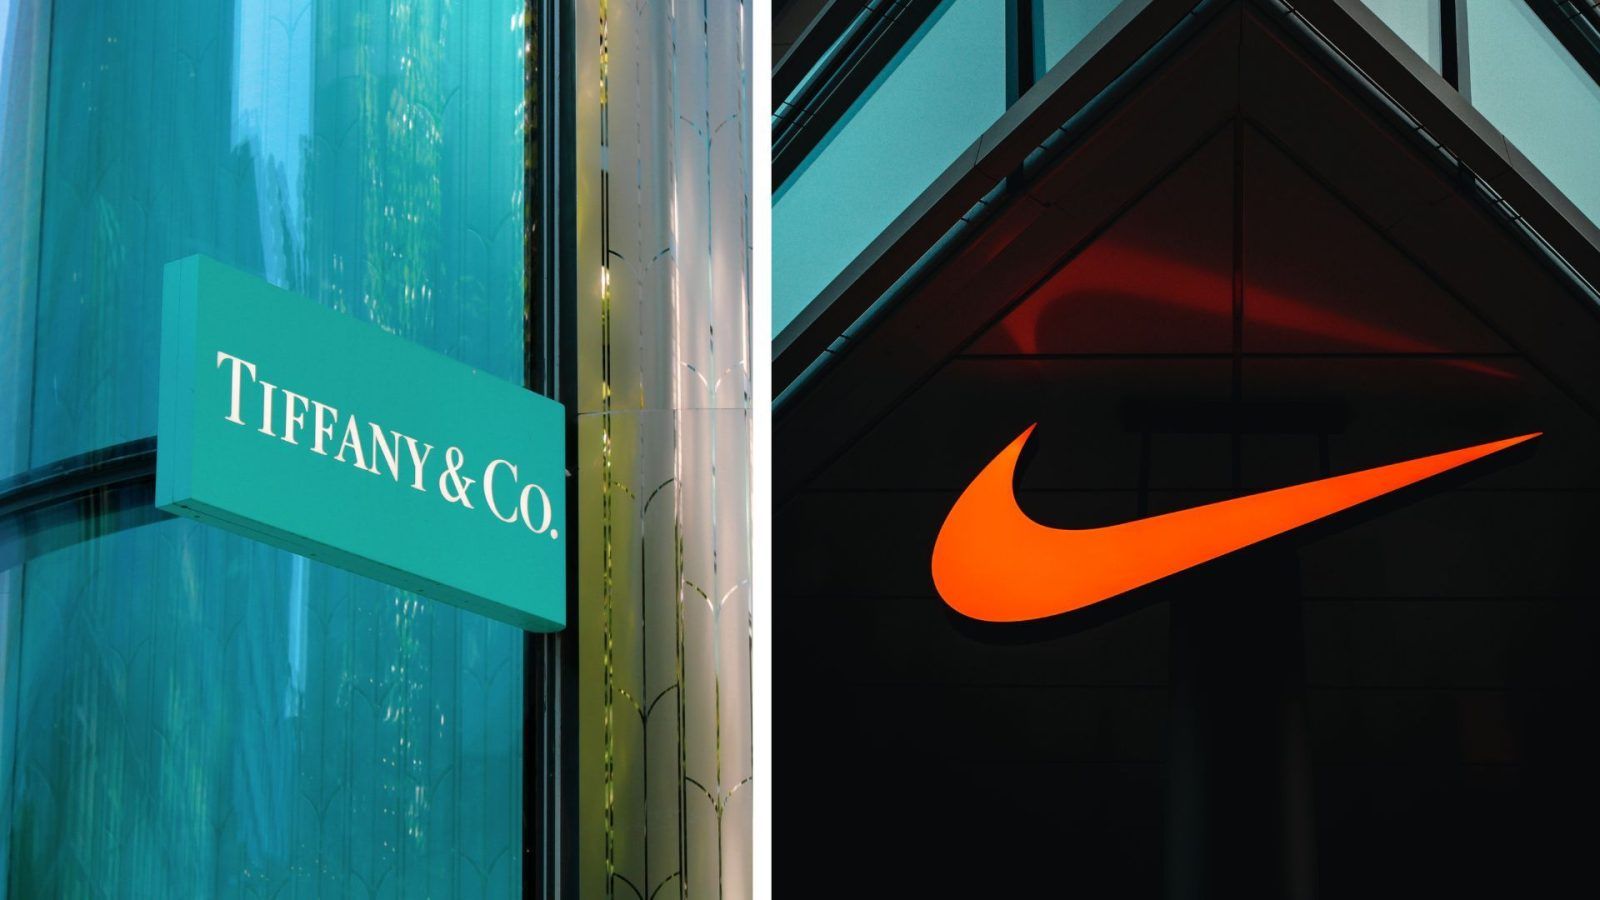 Tiffany & Nike, A Legendary Pair